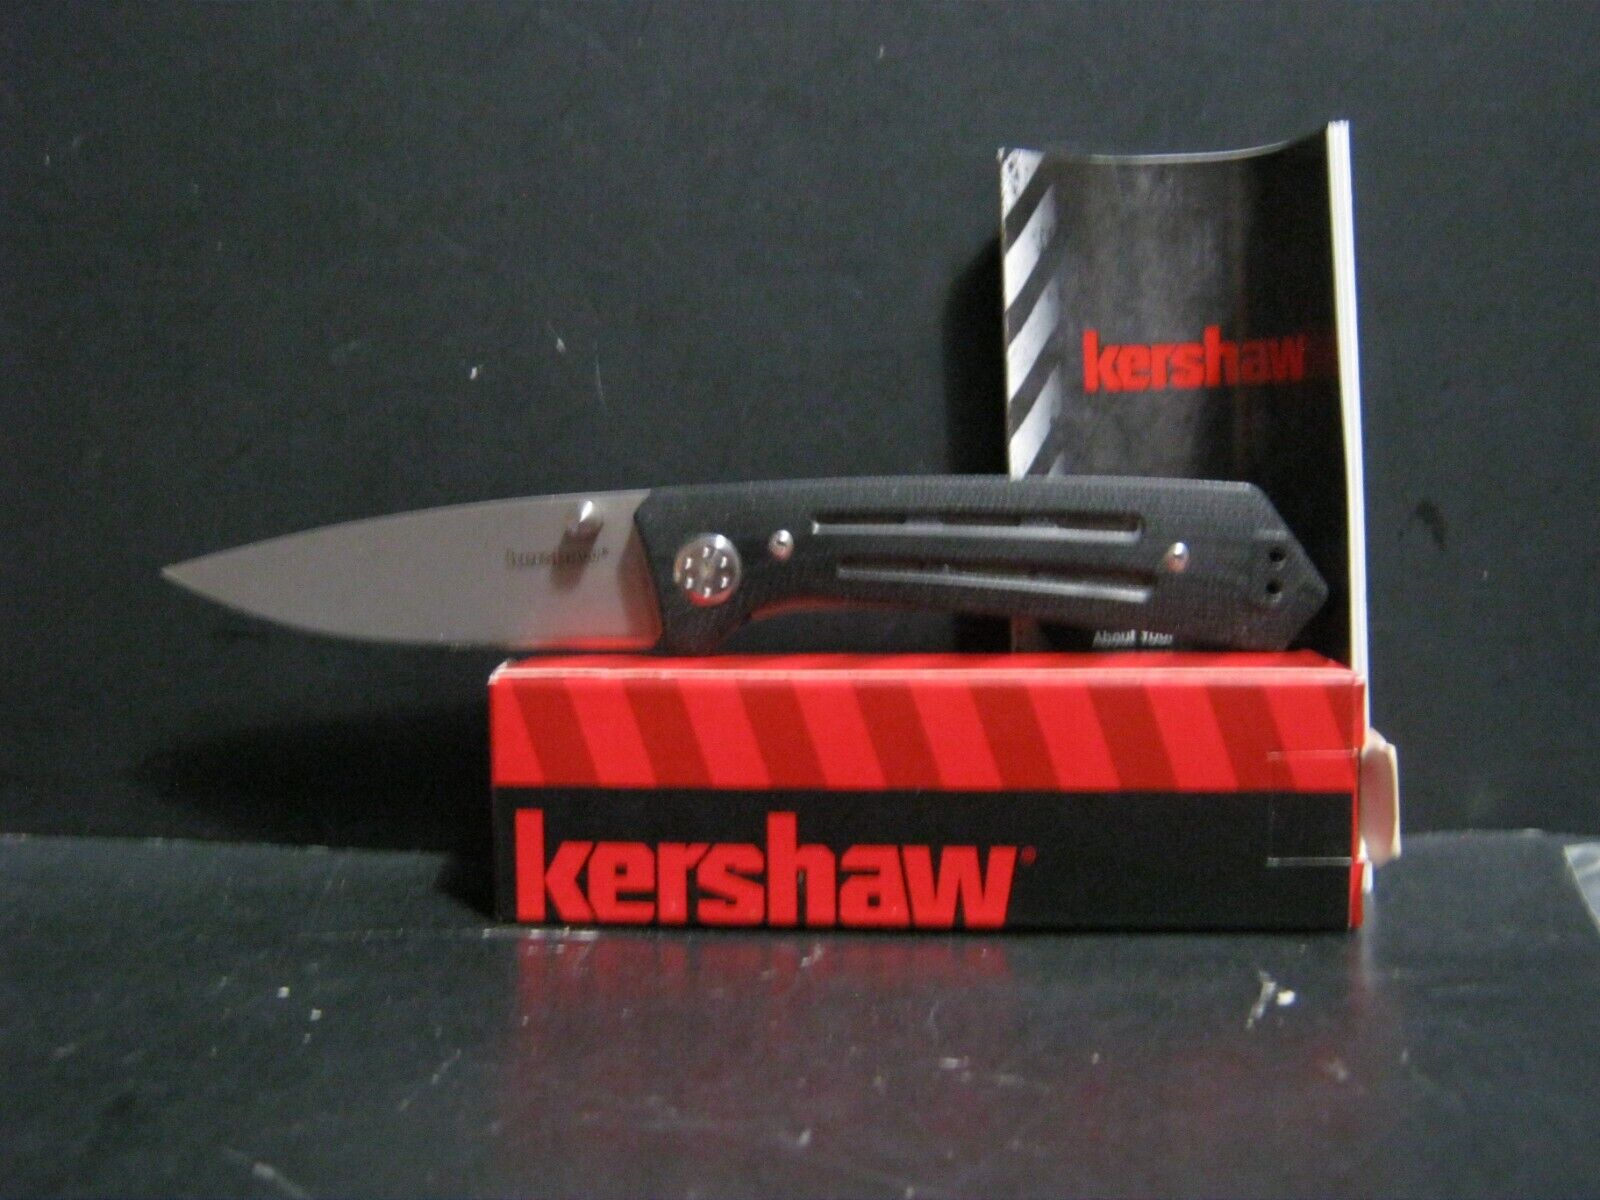 NEW IN BOX - KERSHAW - POCKET KNIFE W/ CLIP